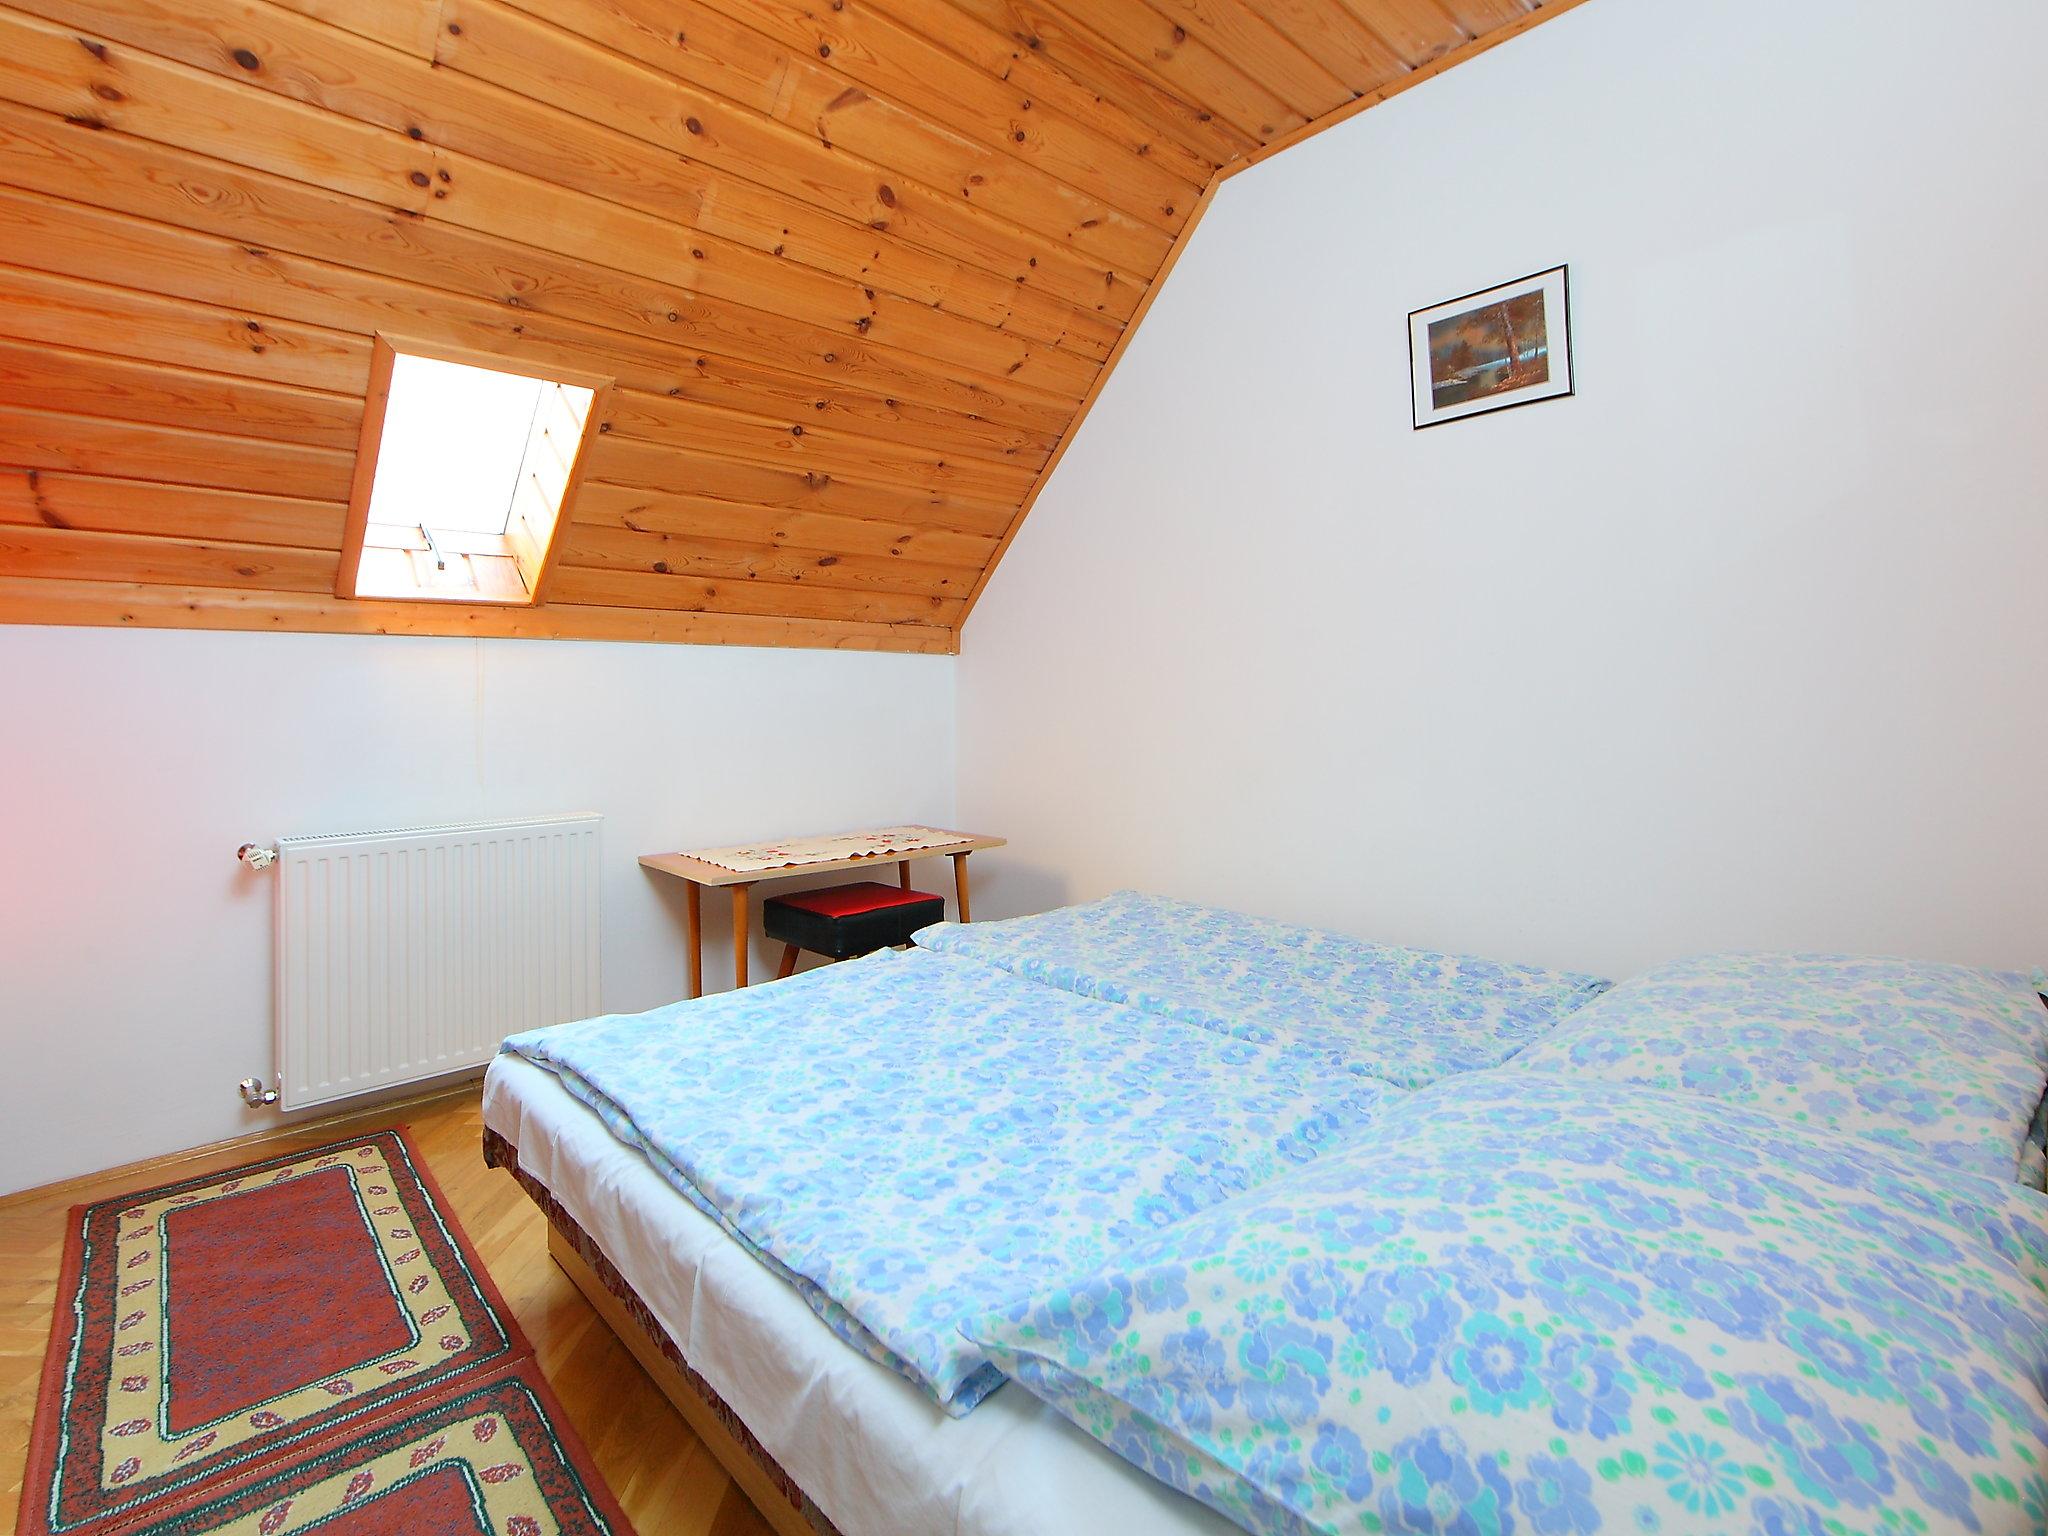 Foto 14 - Casa con 6 camere da letto a Balatonszárszó con giardino e vista mare